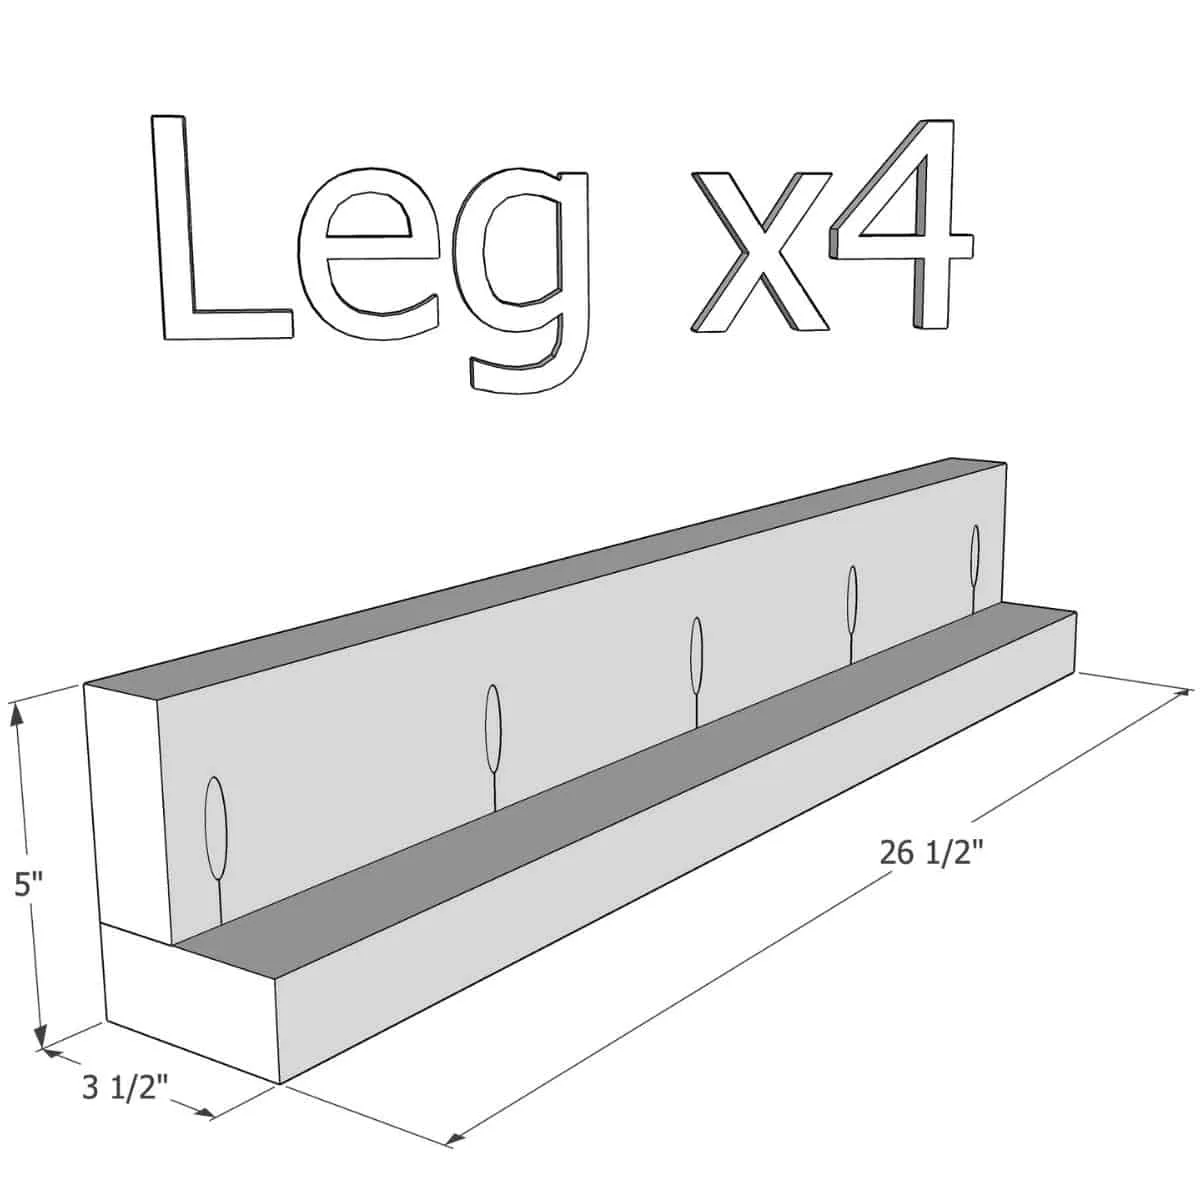 leg assembly for DIY workbench